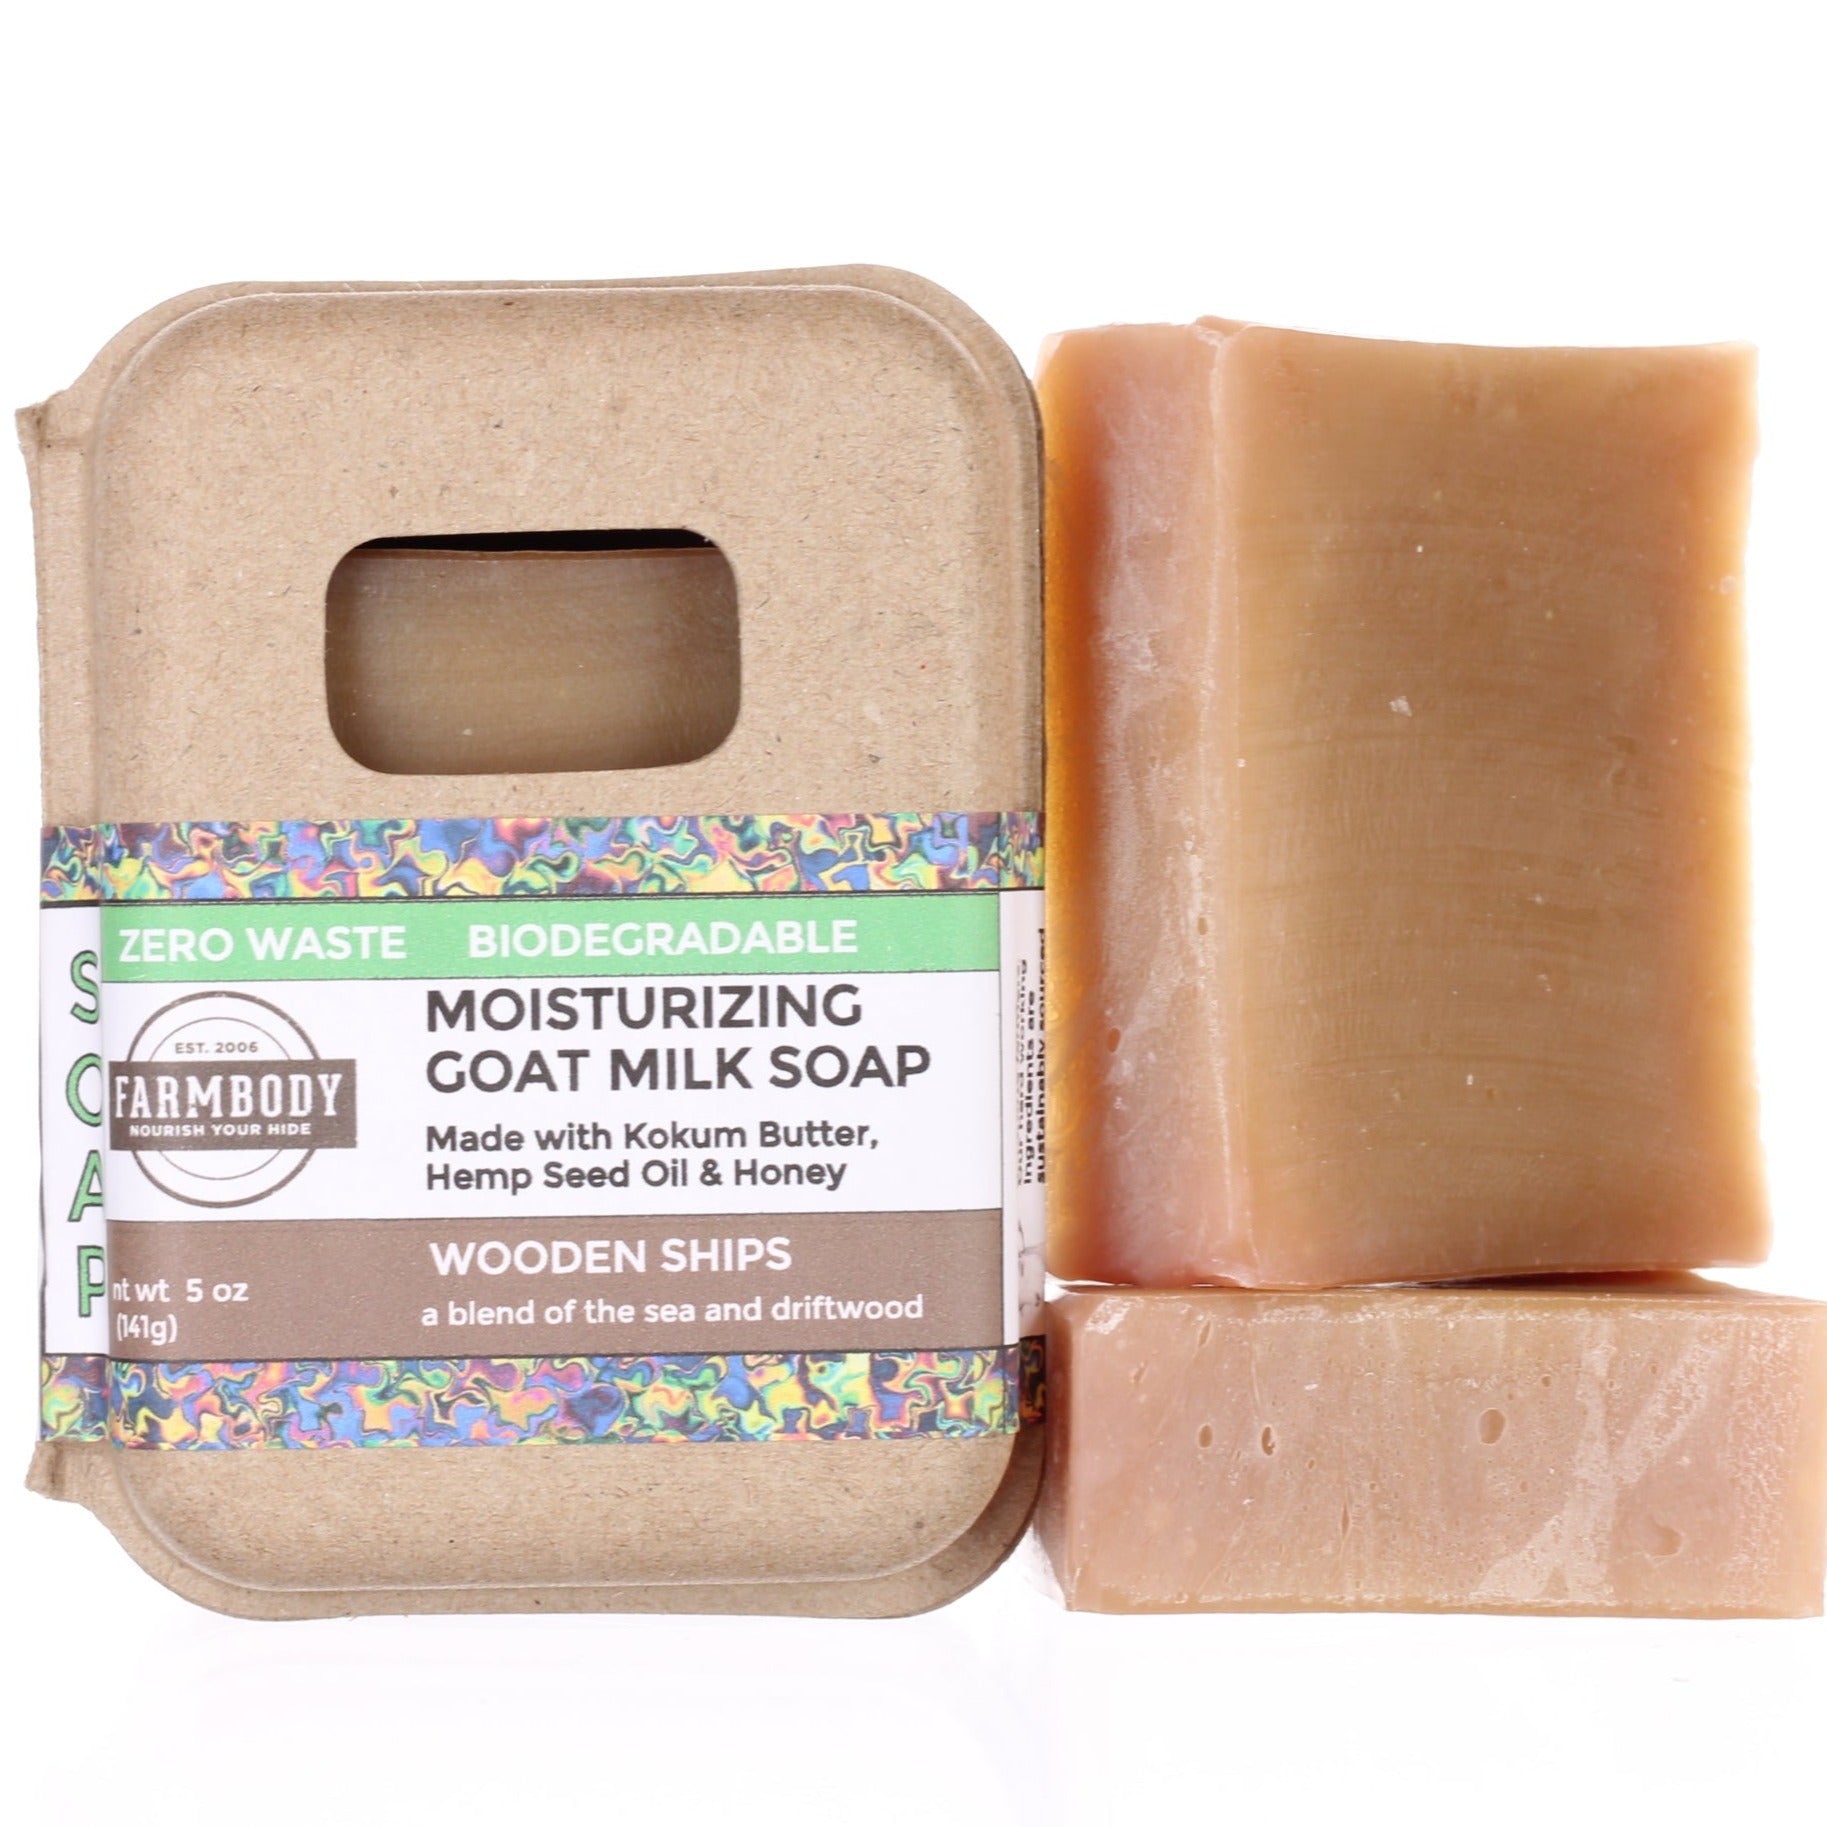 Farmbody Moisturizing Goat Milk Bar Soap for Eczema and Sensitive Skin Wood Ships fragrance of vetiver and driftwood